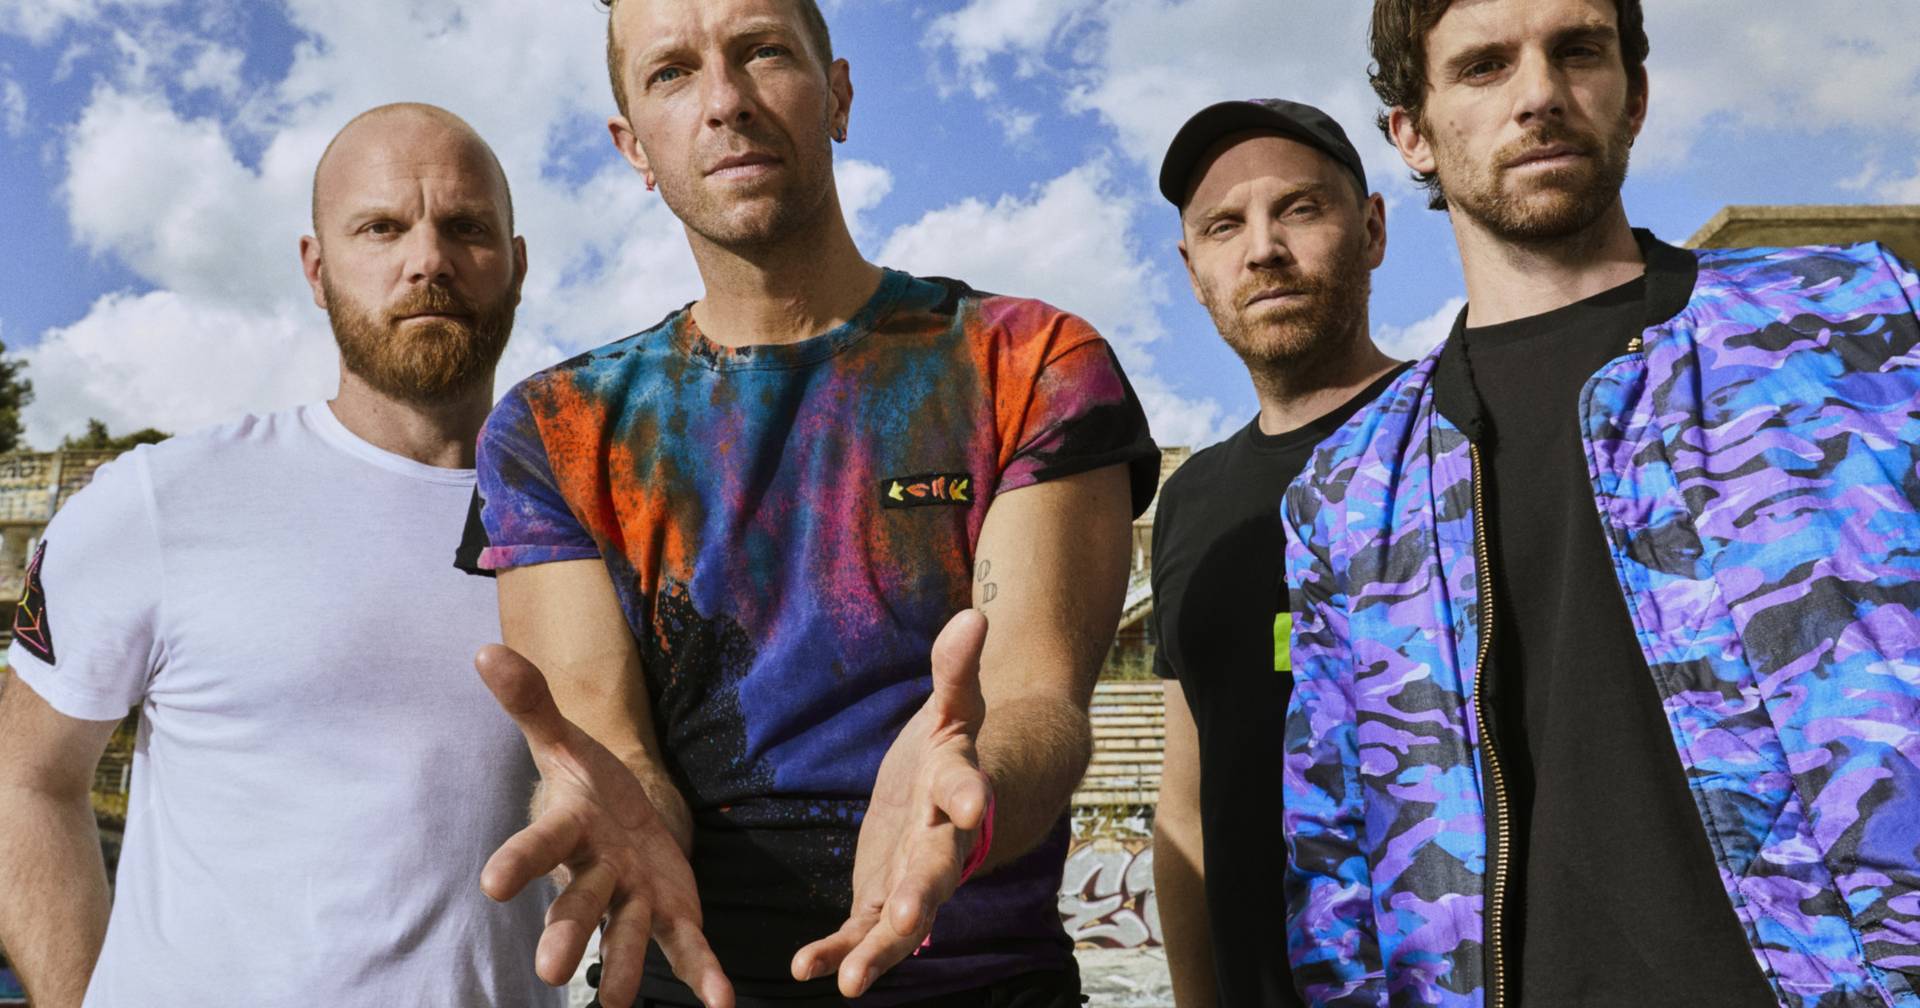 Coldplay anunciam concerto em Portugal. Bilhetes à venda na quinta